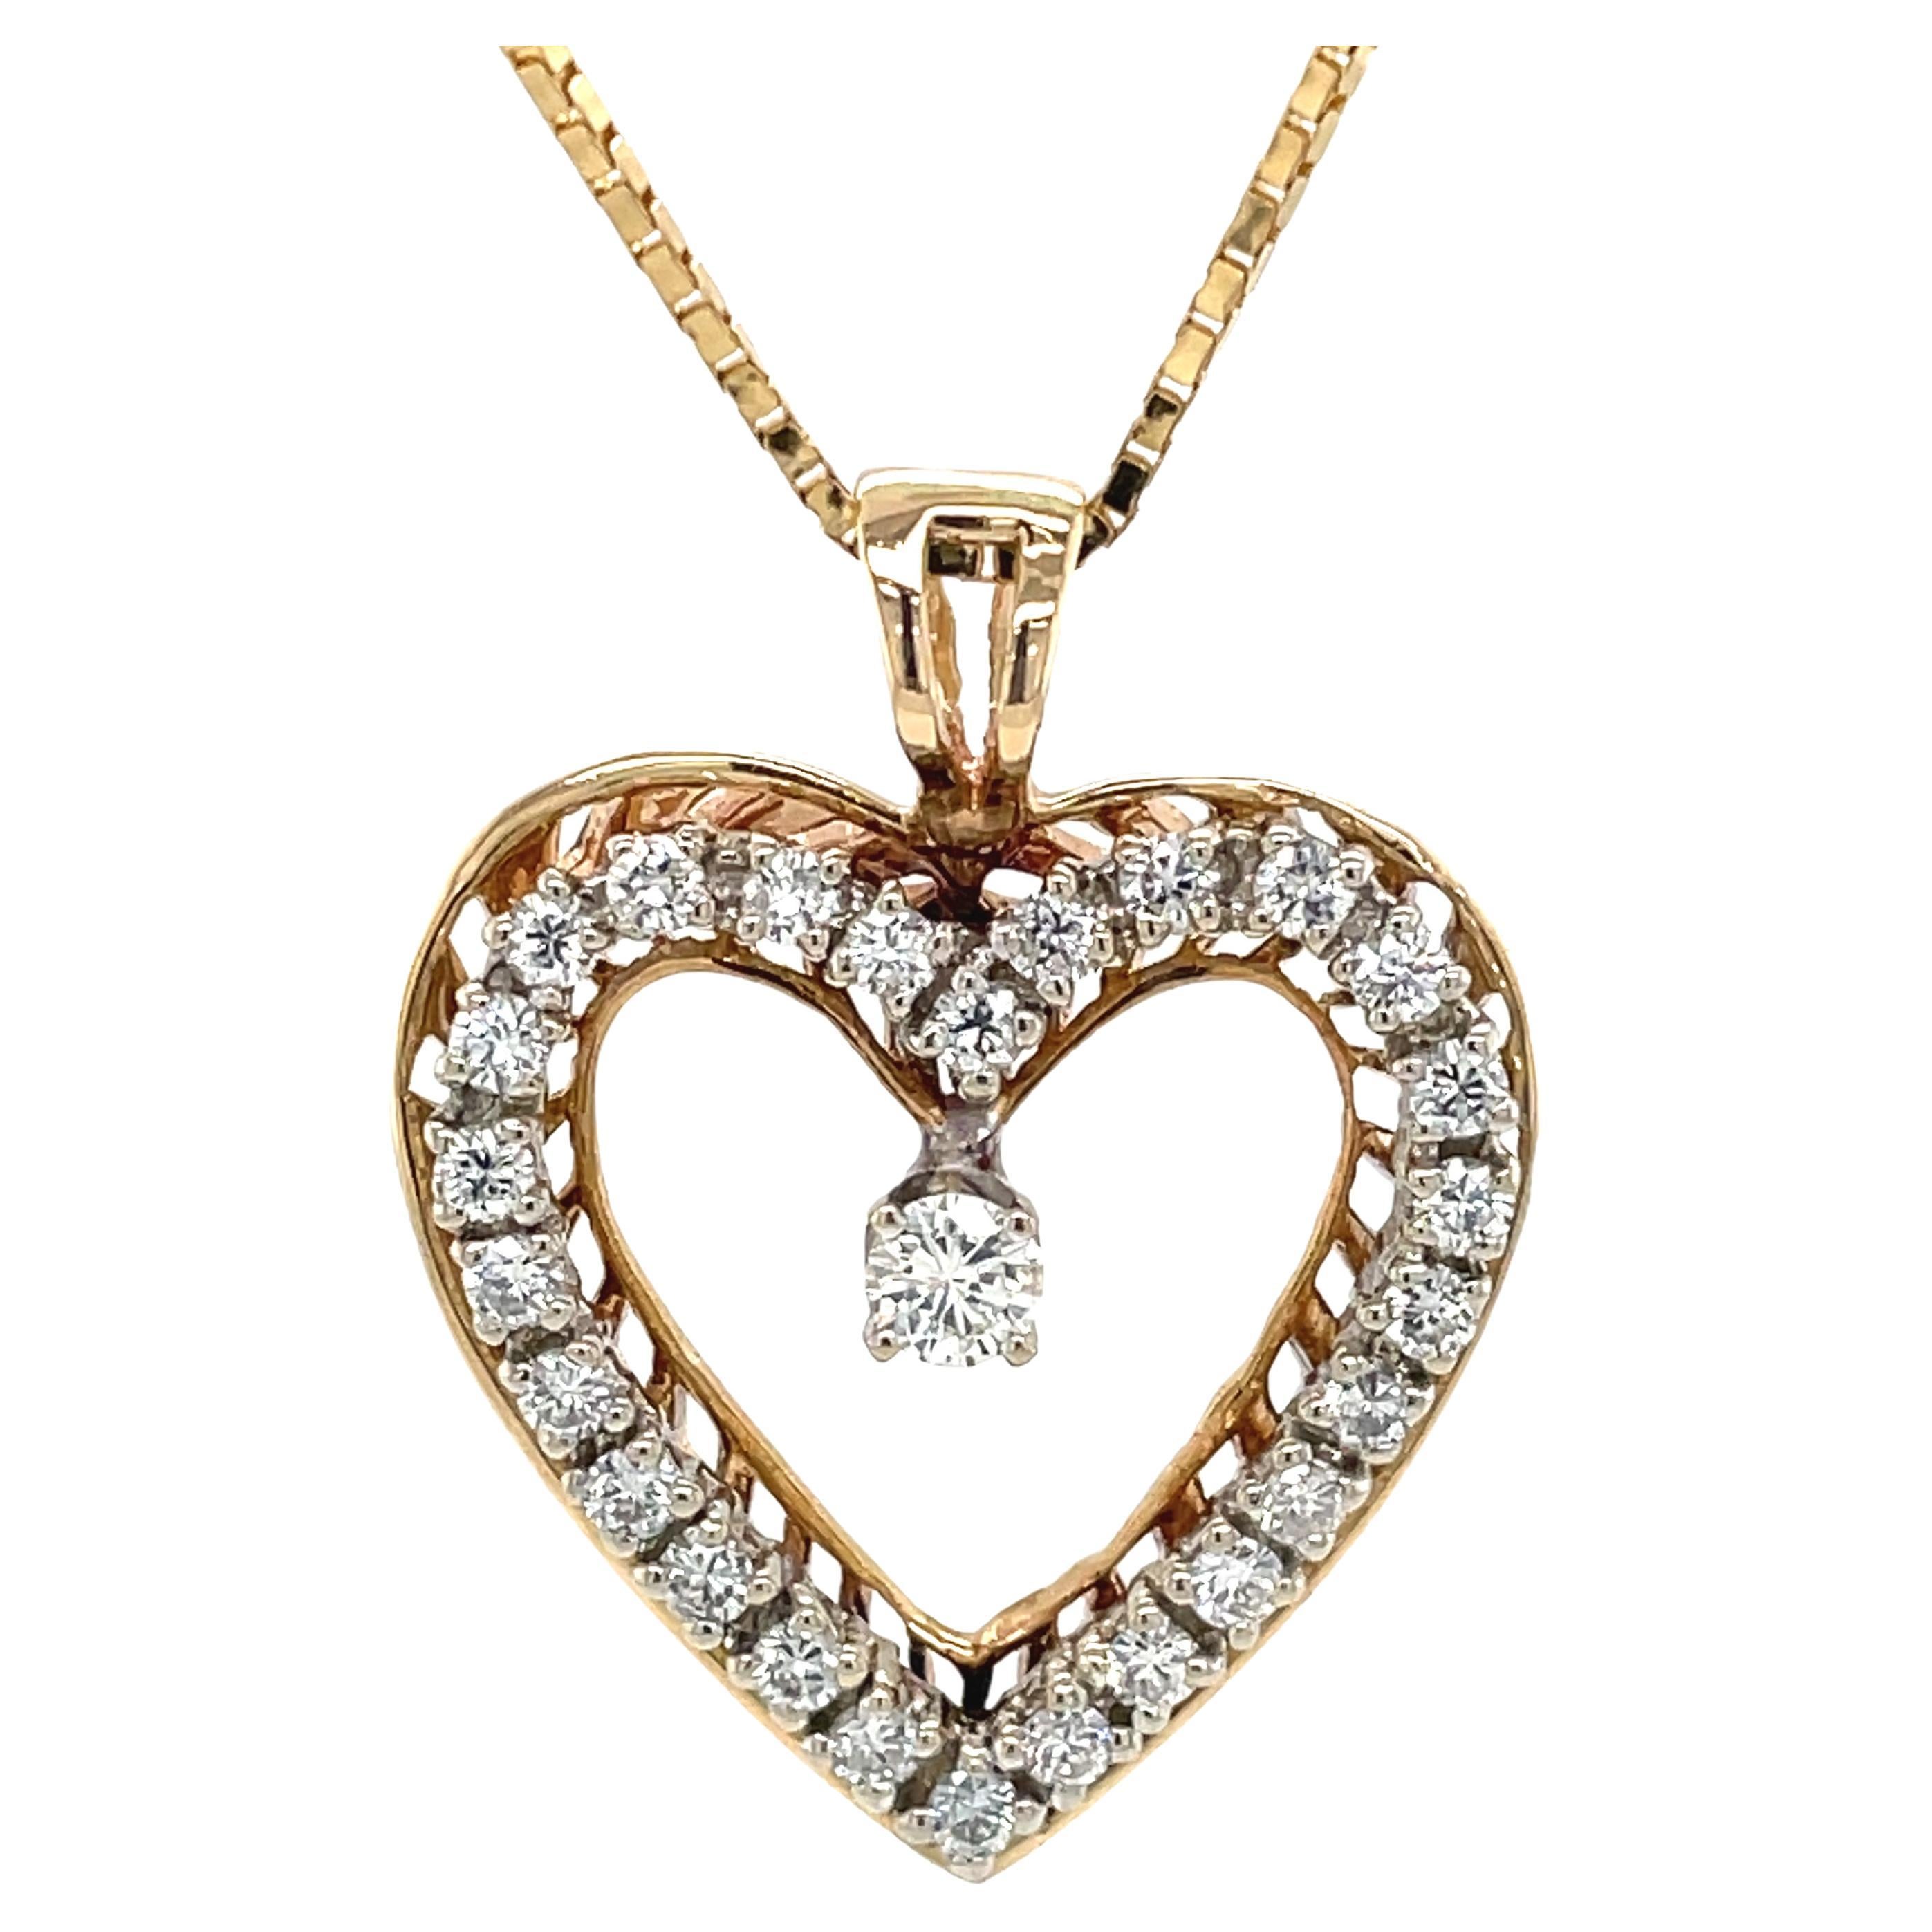 Diamond Heart Pendant 14 Karat Yellow Gold Necklace